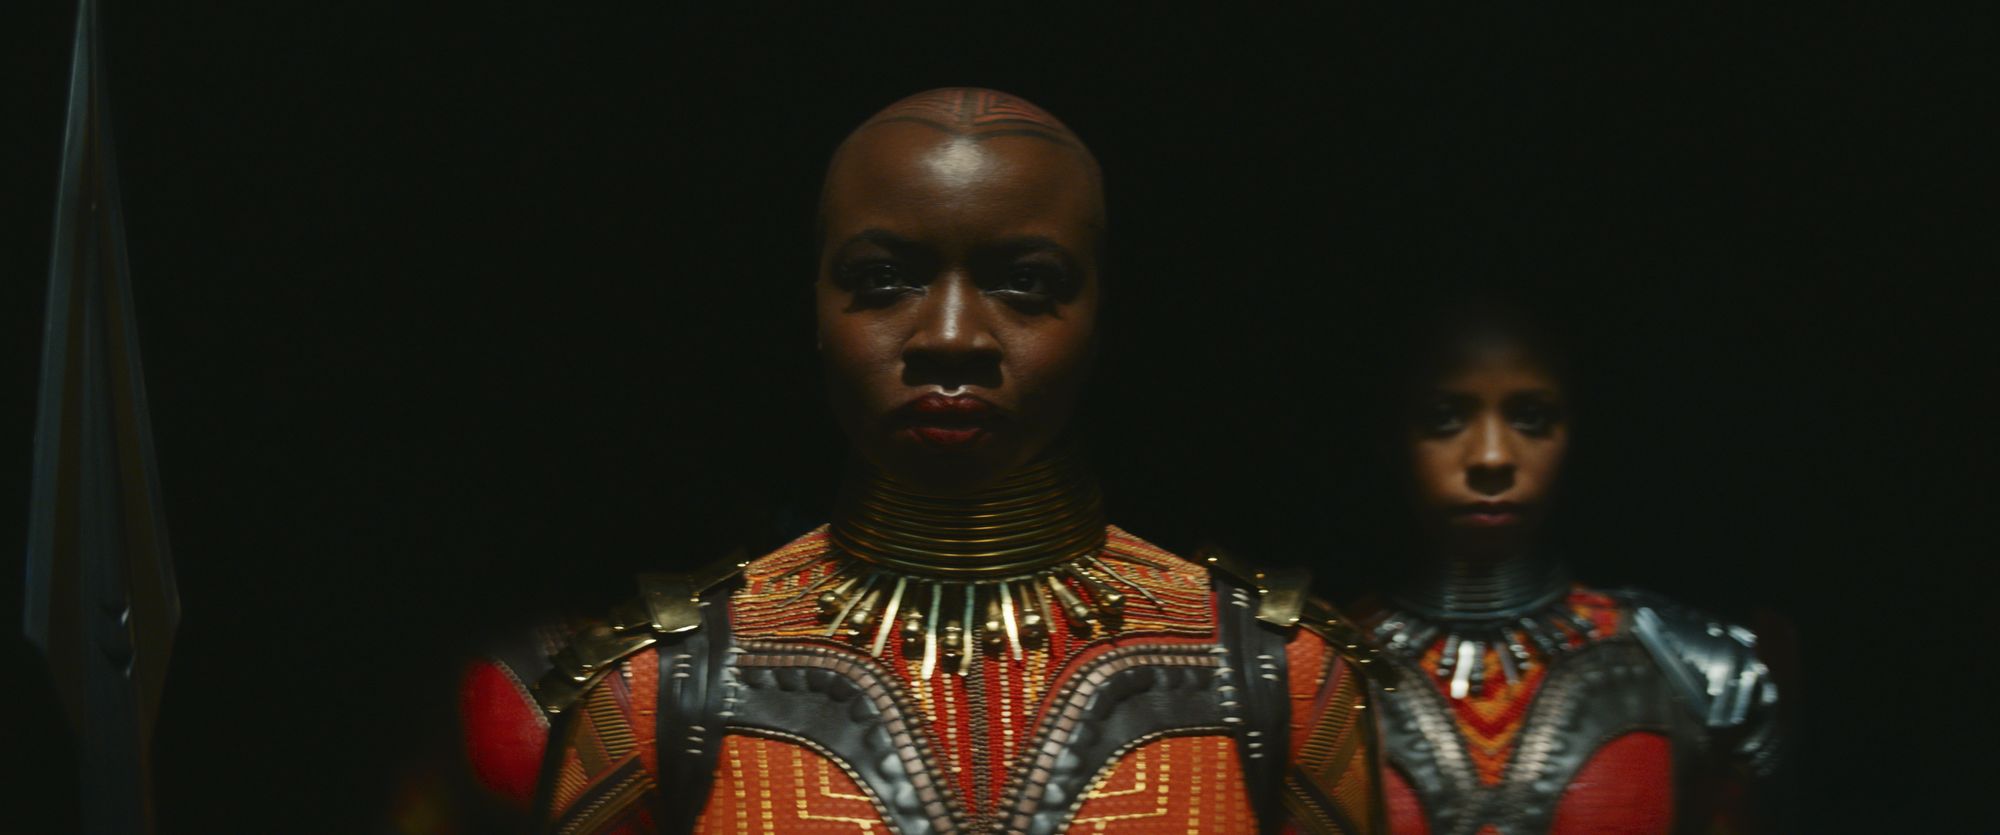 Black Panther: Wakanda Forever (2022) - IMDb